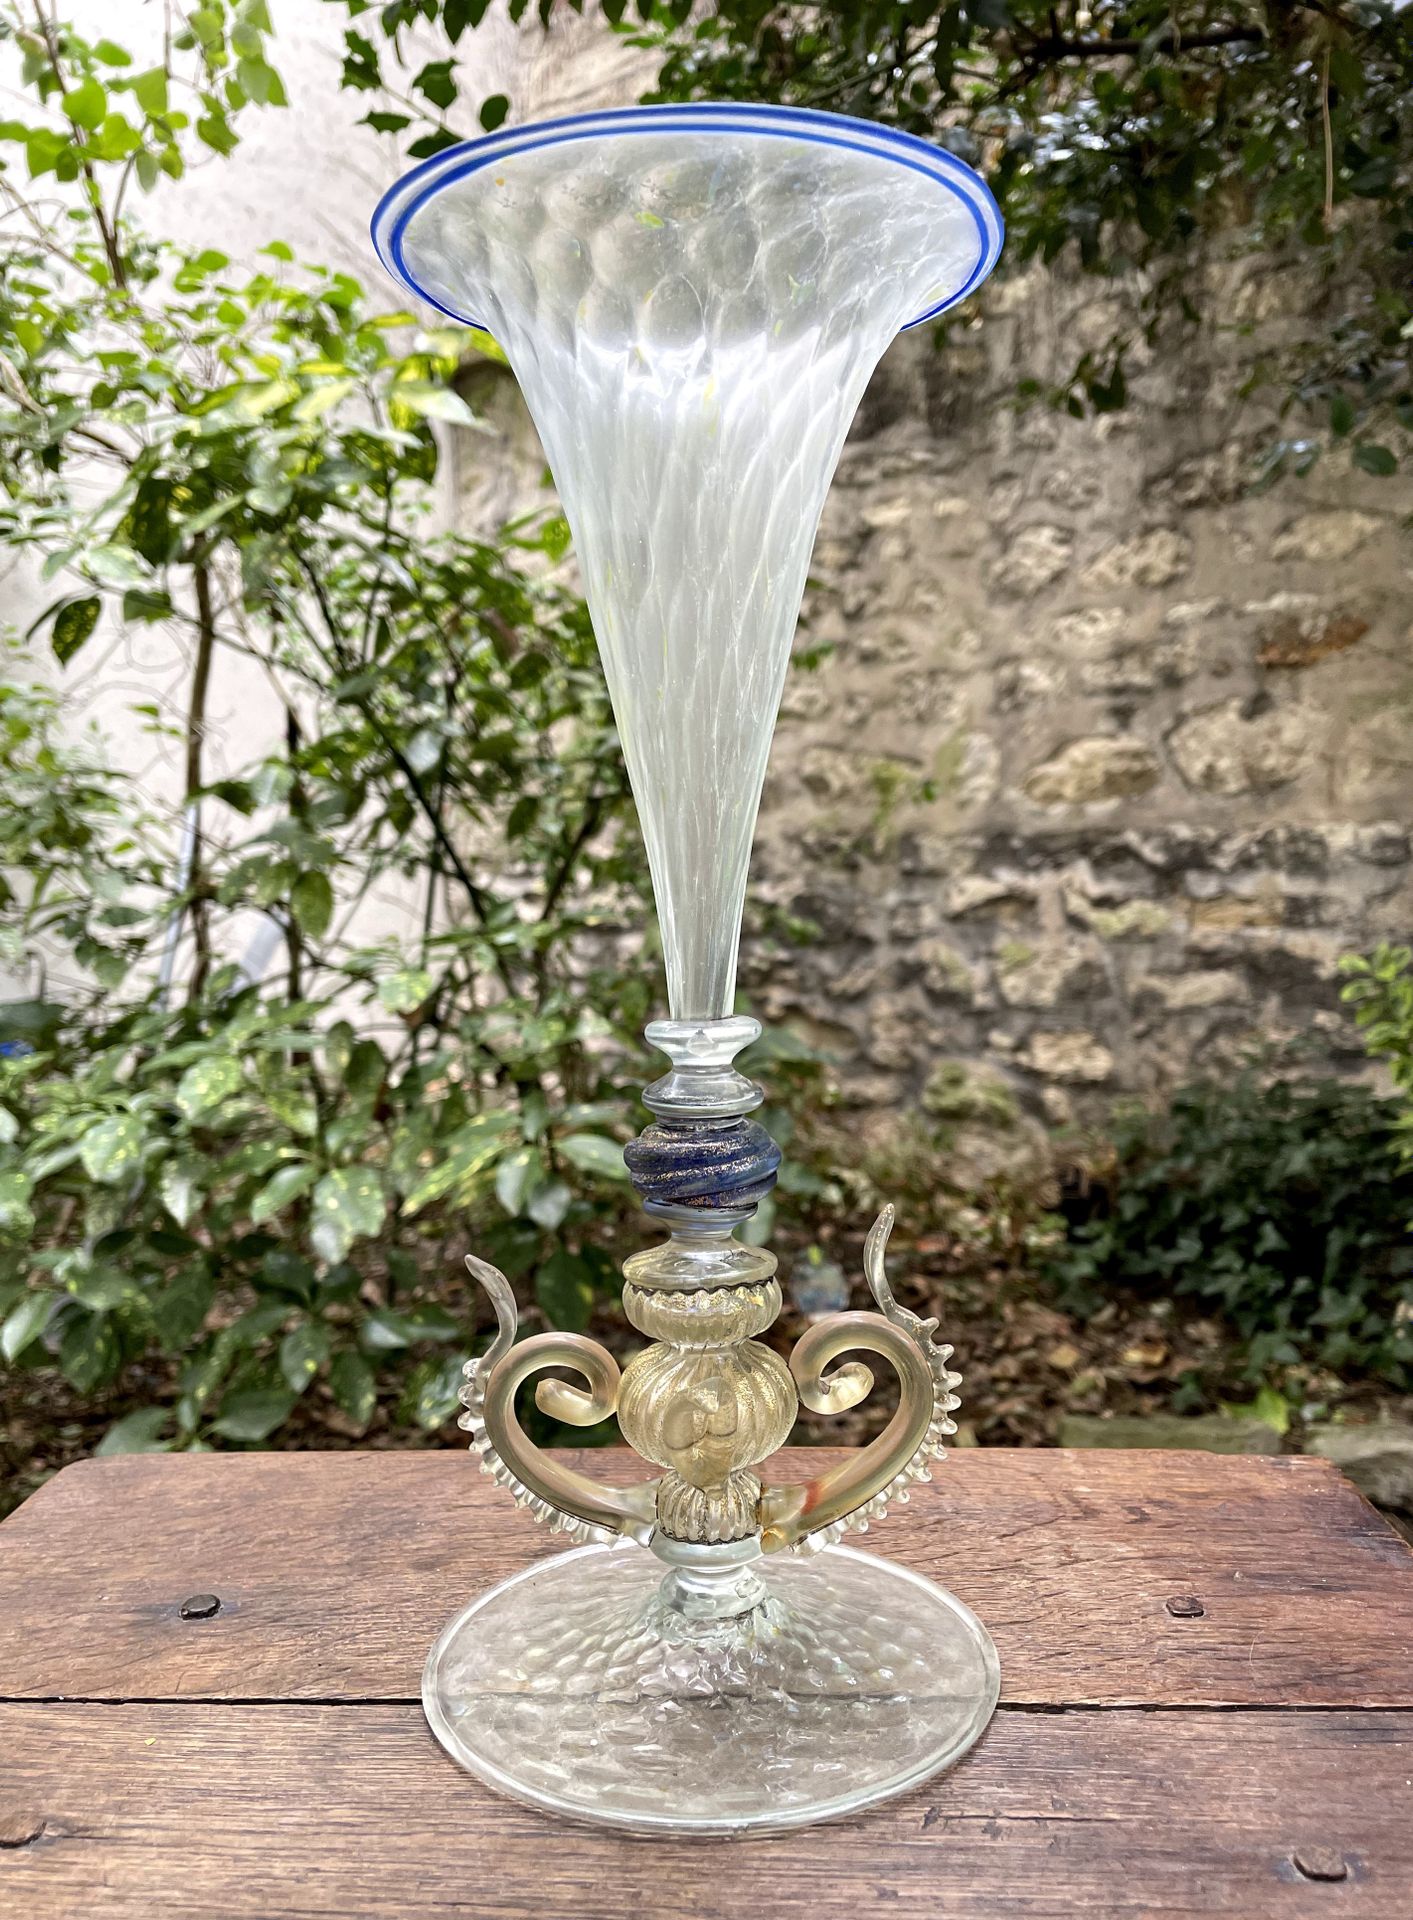 Null 
威尼斯风格的高角花瓶。


穆拉诺，19世纪末


H.29厘米